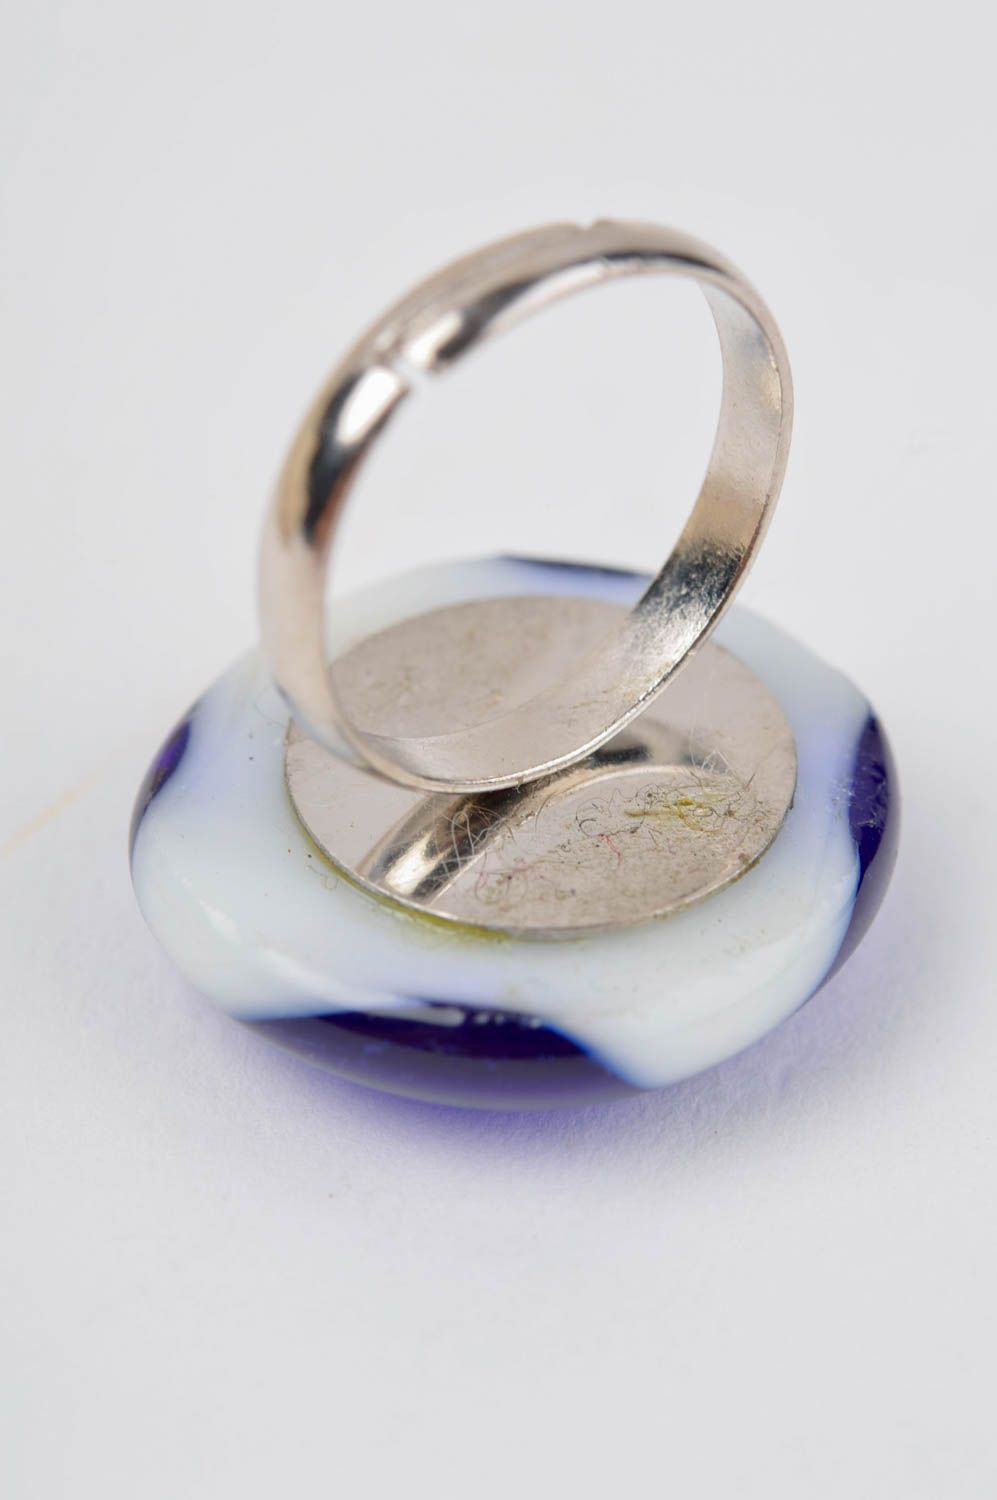 Stylish handmade glass ring handmade jewellery fashion trends artisan jewelry photo 3